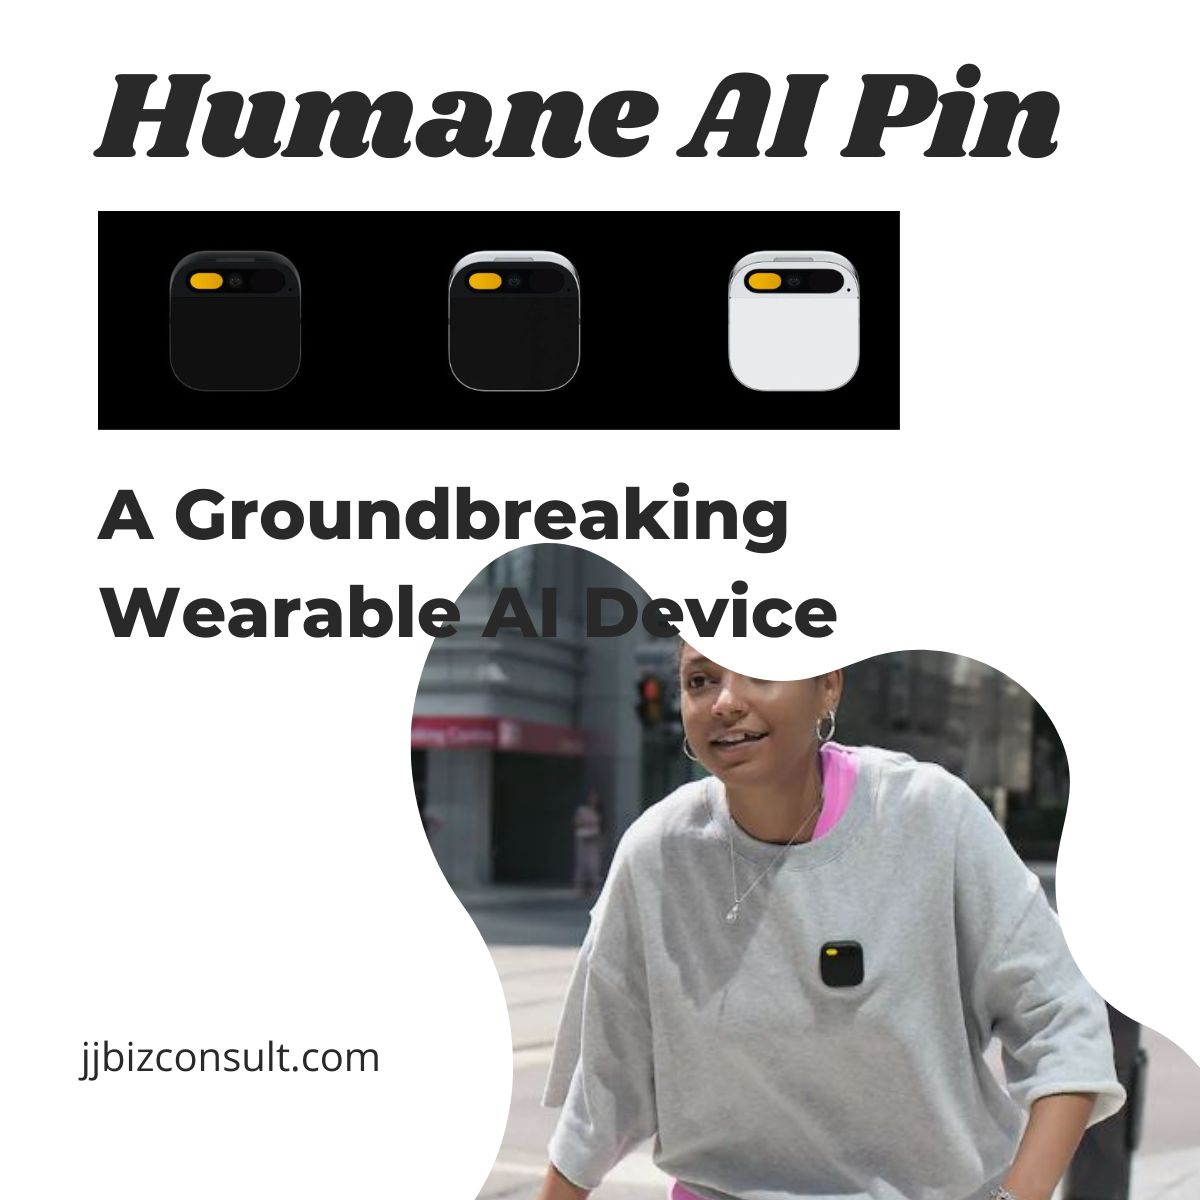 Humane AI Pin: A Groundbreaking Wearable AI Device